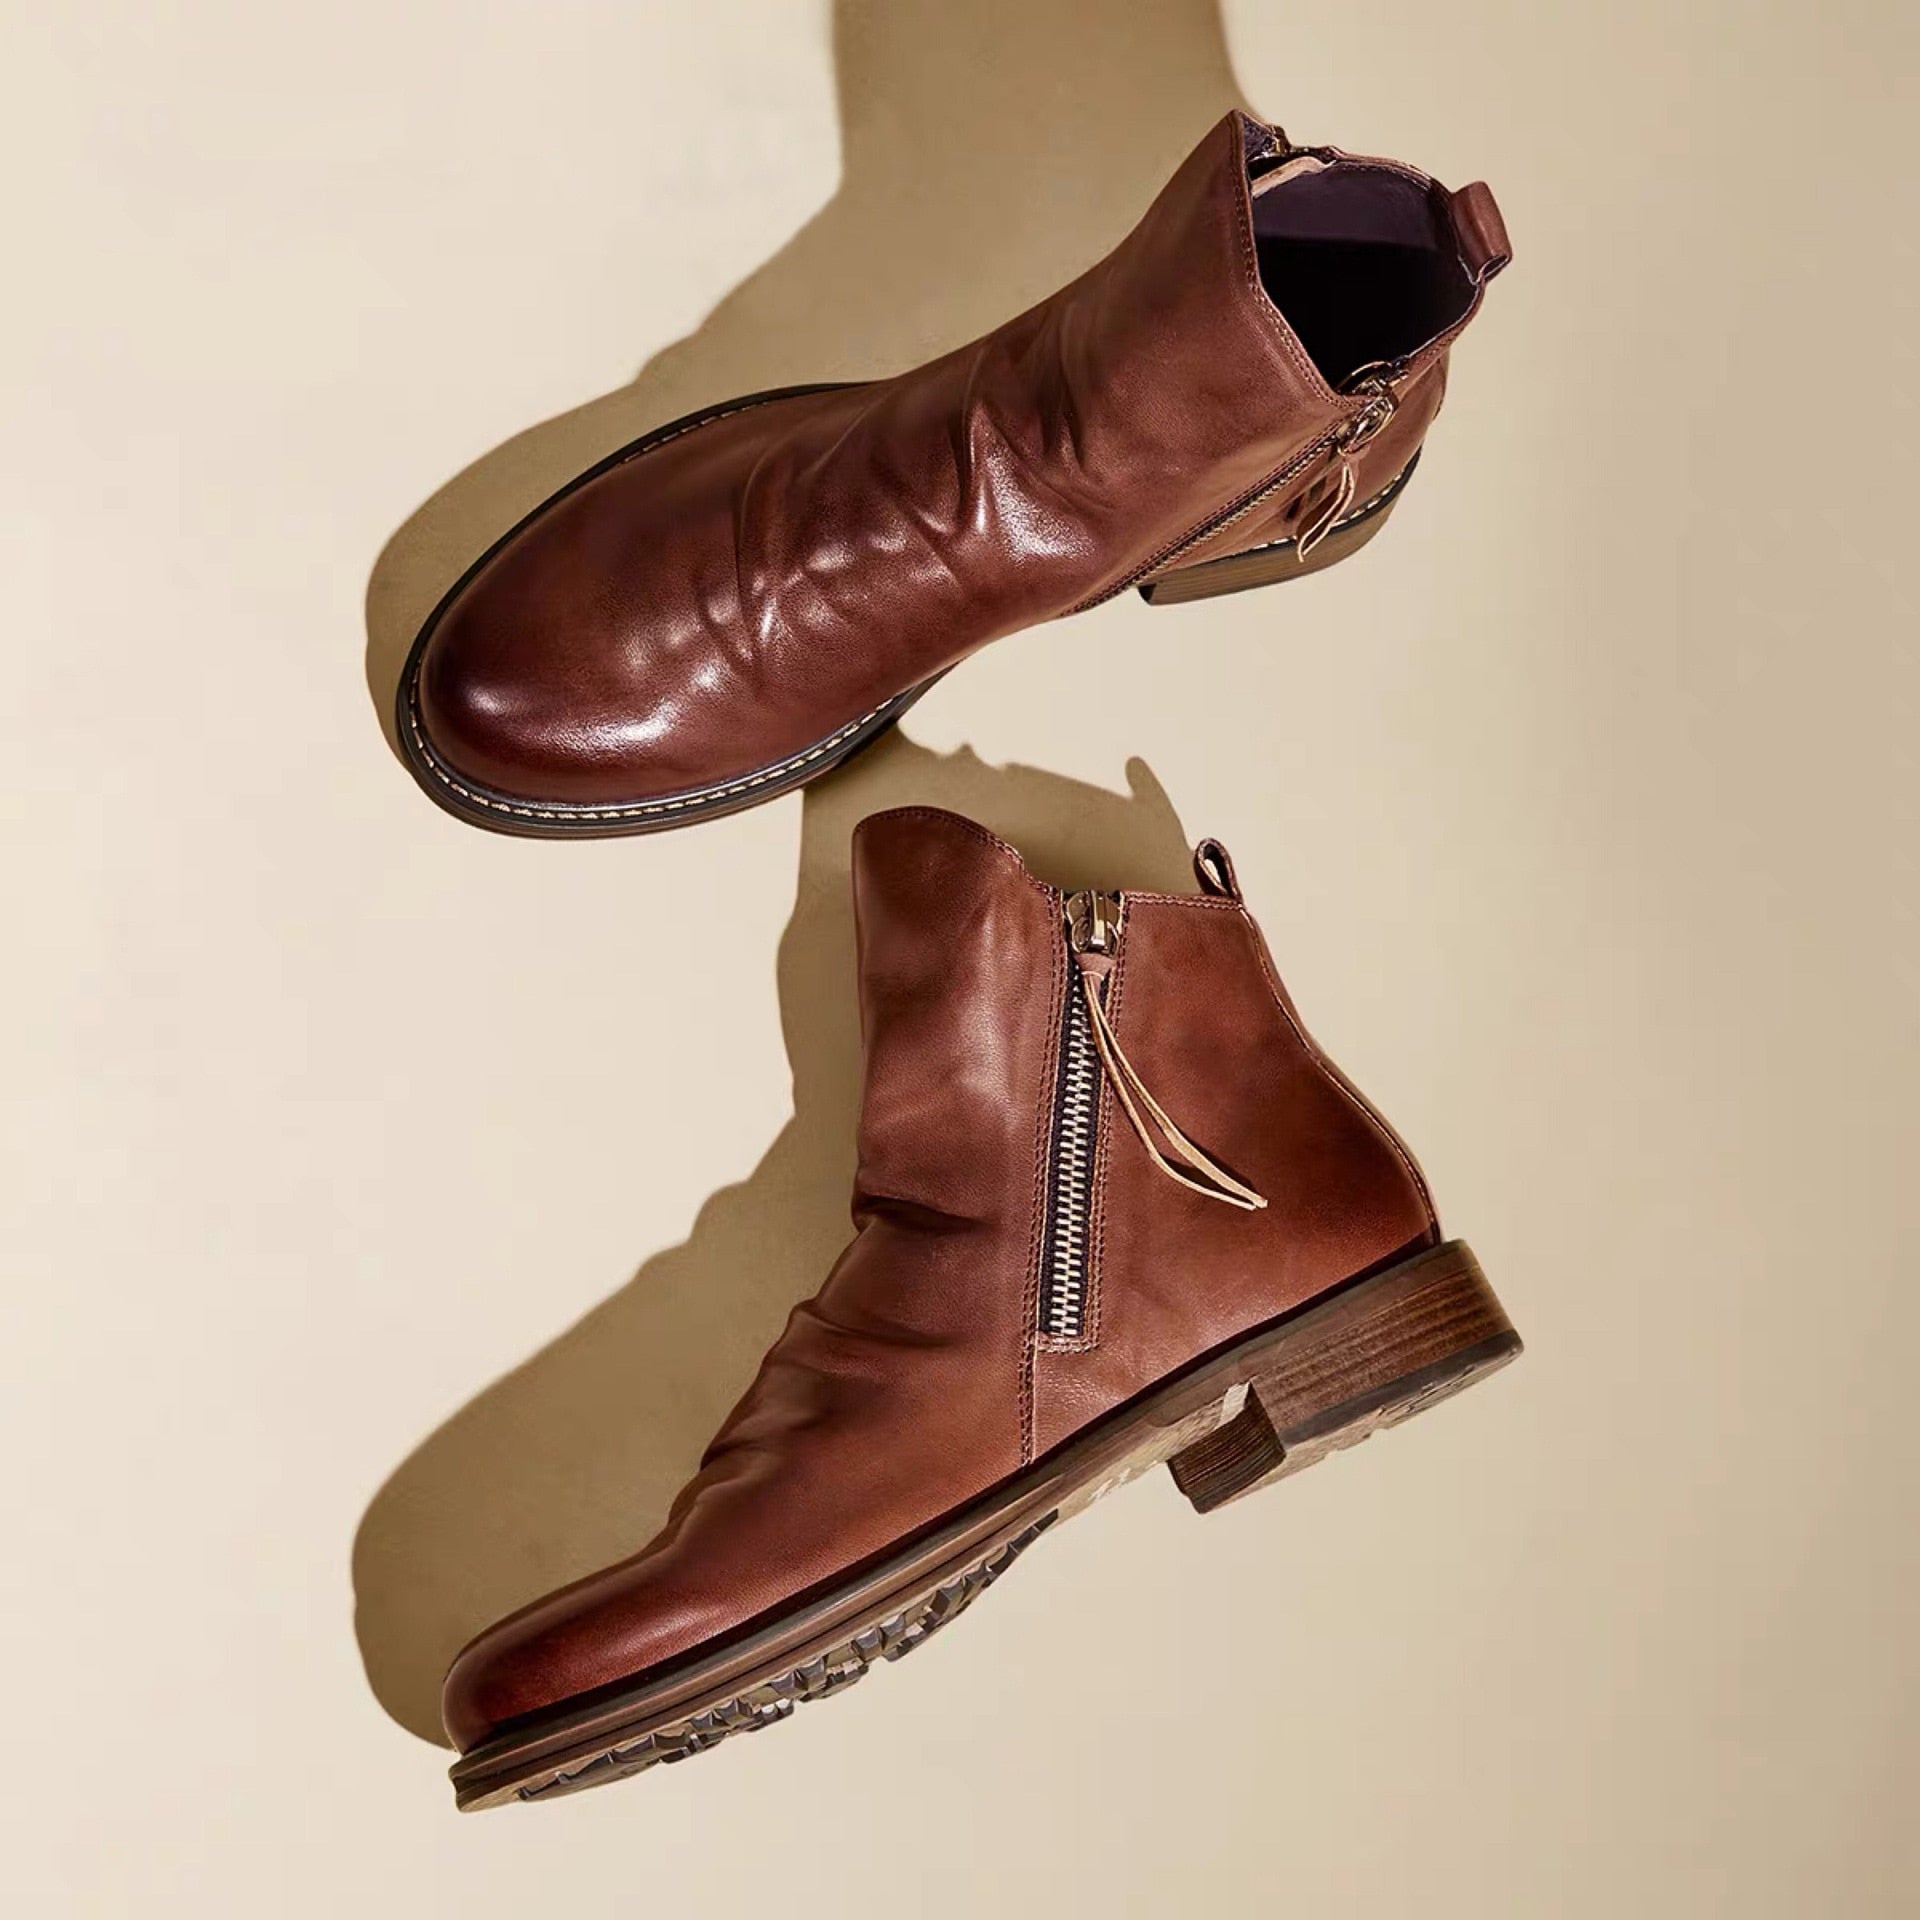 Retro Ankle Non-Slip Leather Boots Men